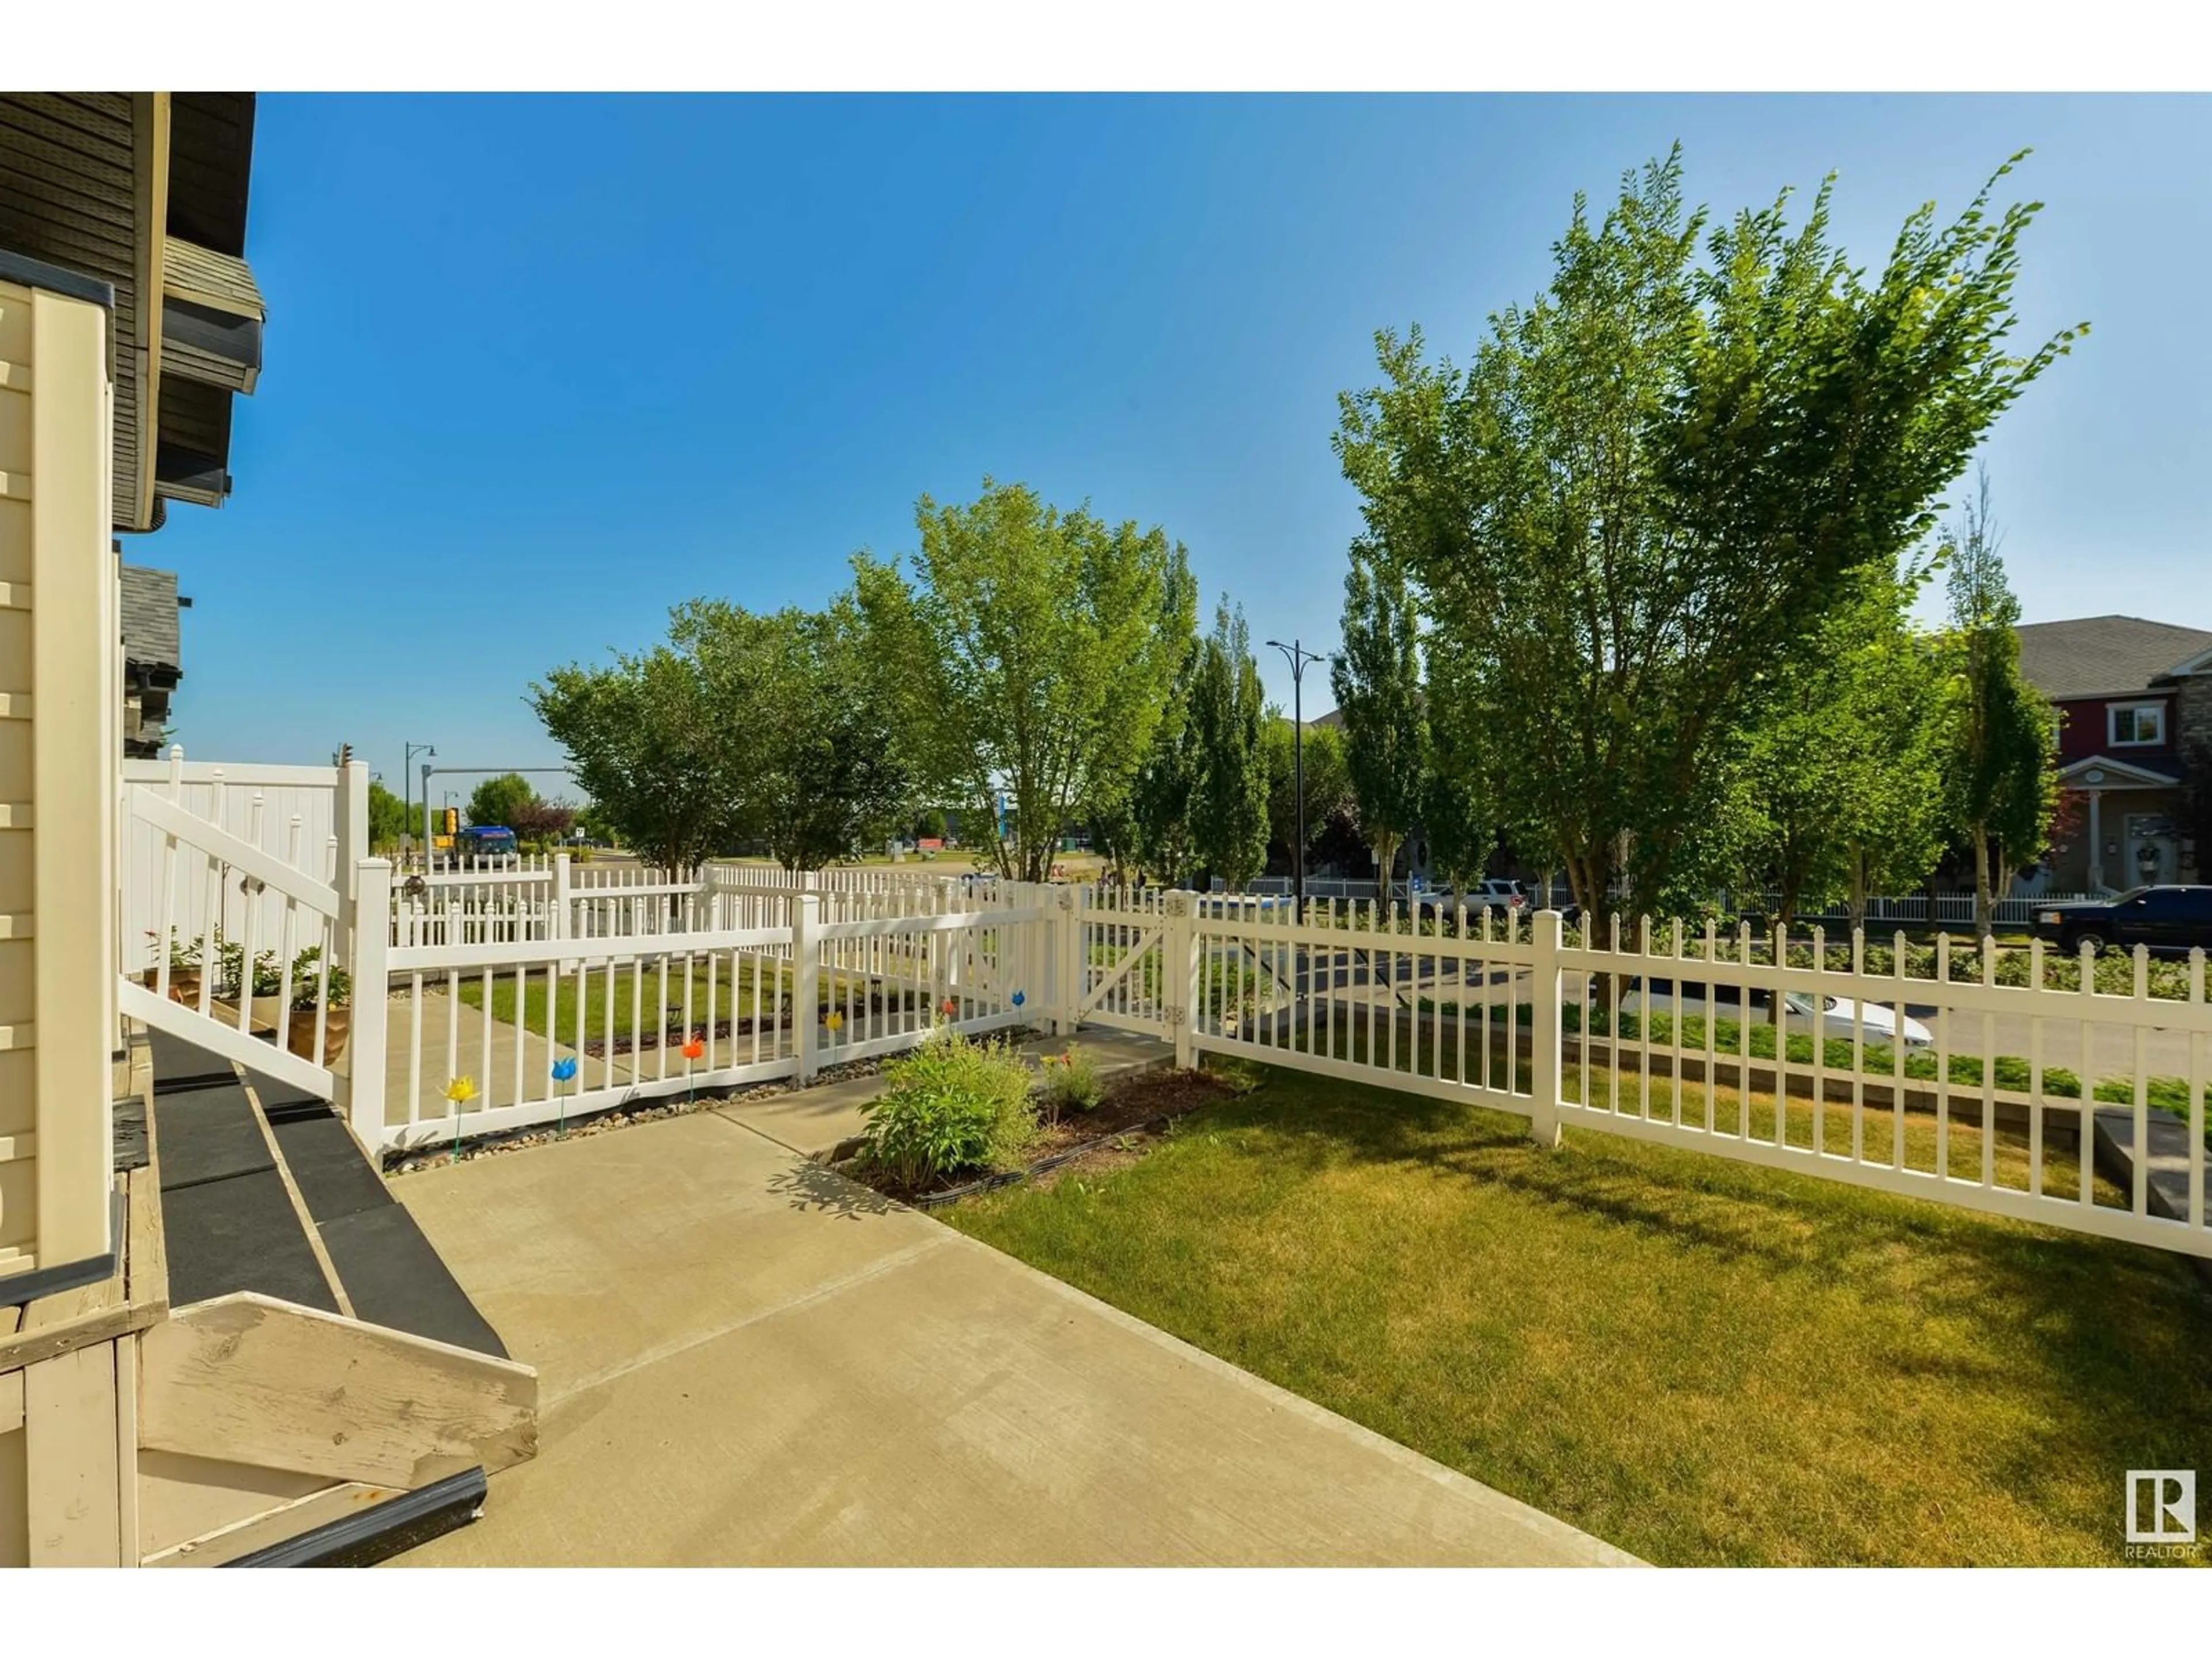 Fenced yard for #130 465 HEMINGWAY RD NW, Edmonton Alberta T6M0J7